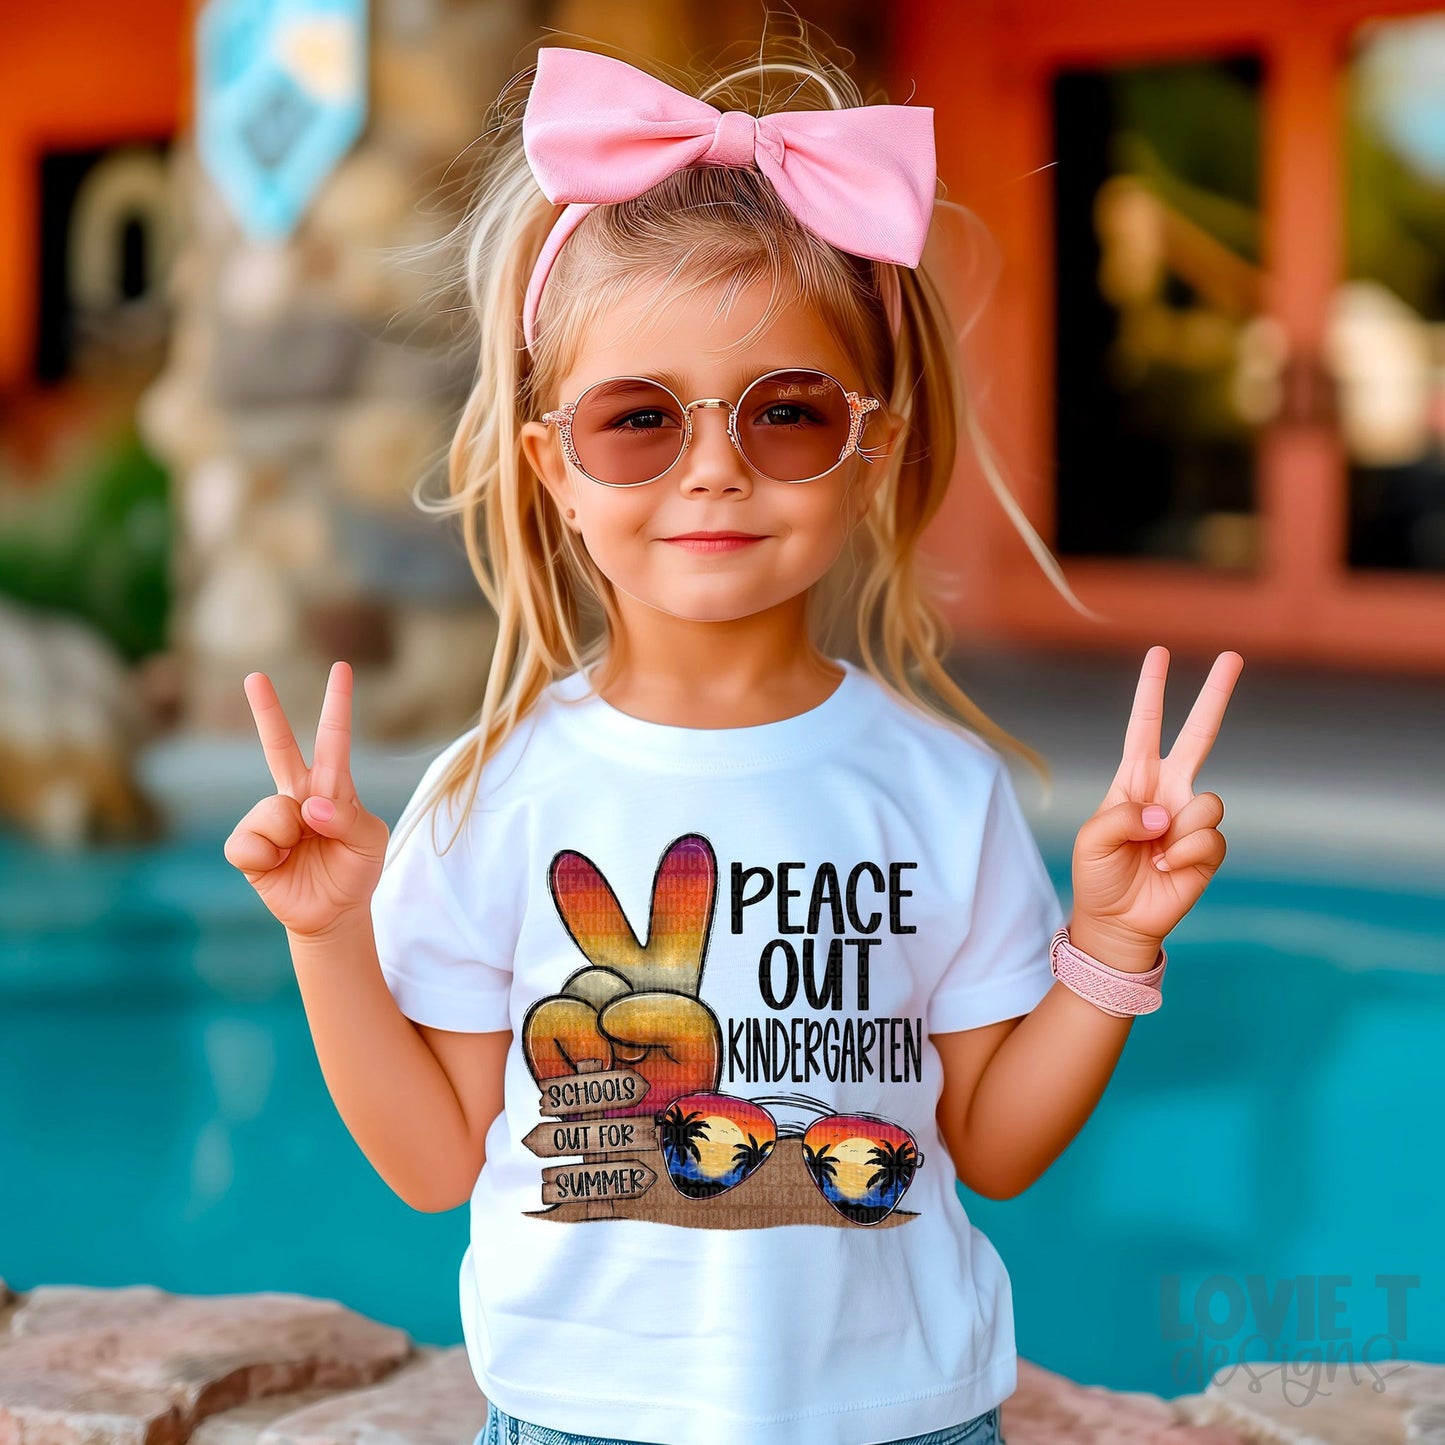 Peace Out PreK - 5th Grade